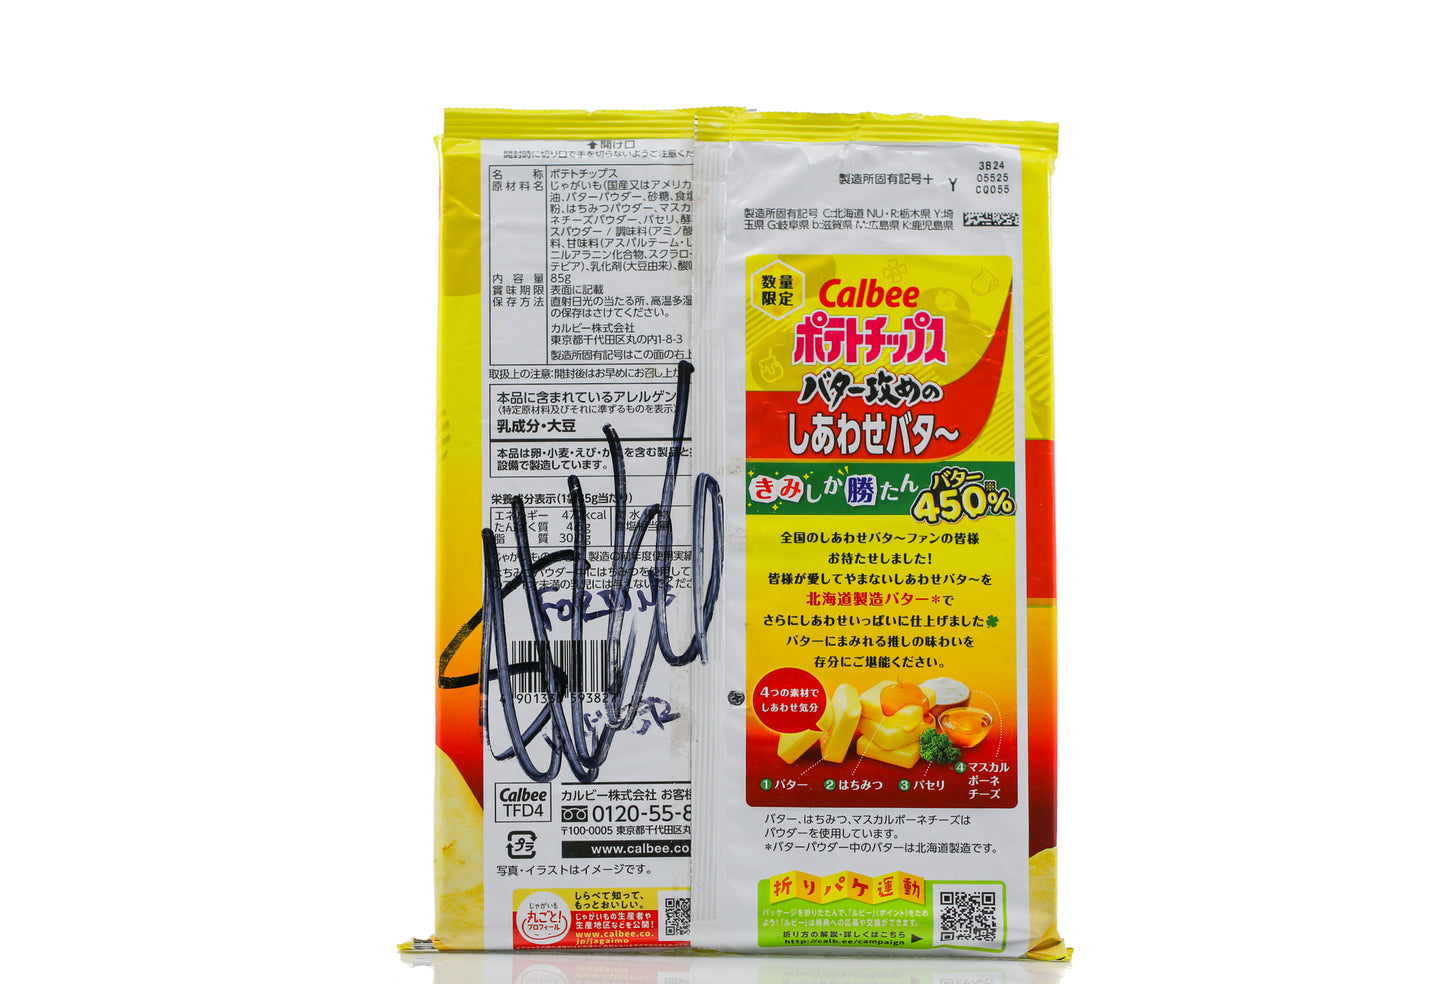 SuckLord "Honey Butter" Calbee Japan #30